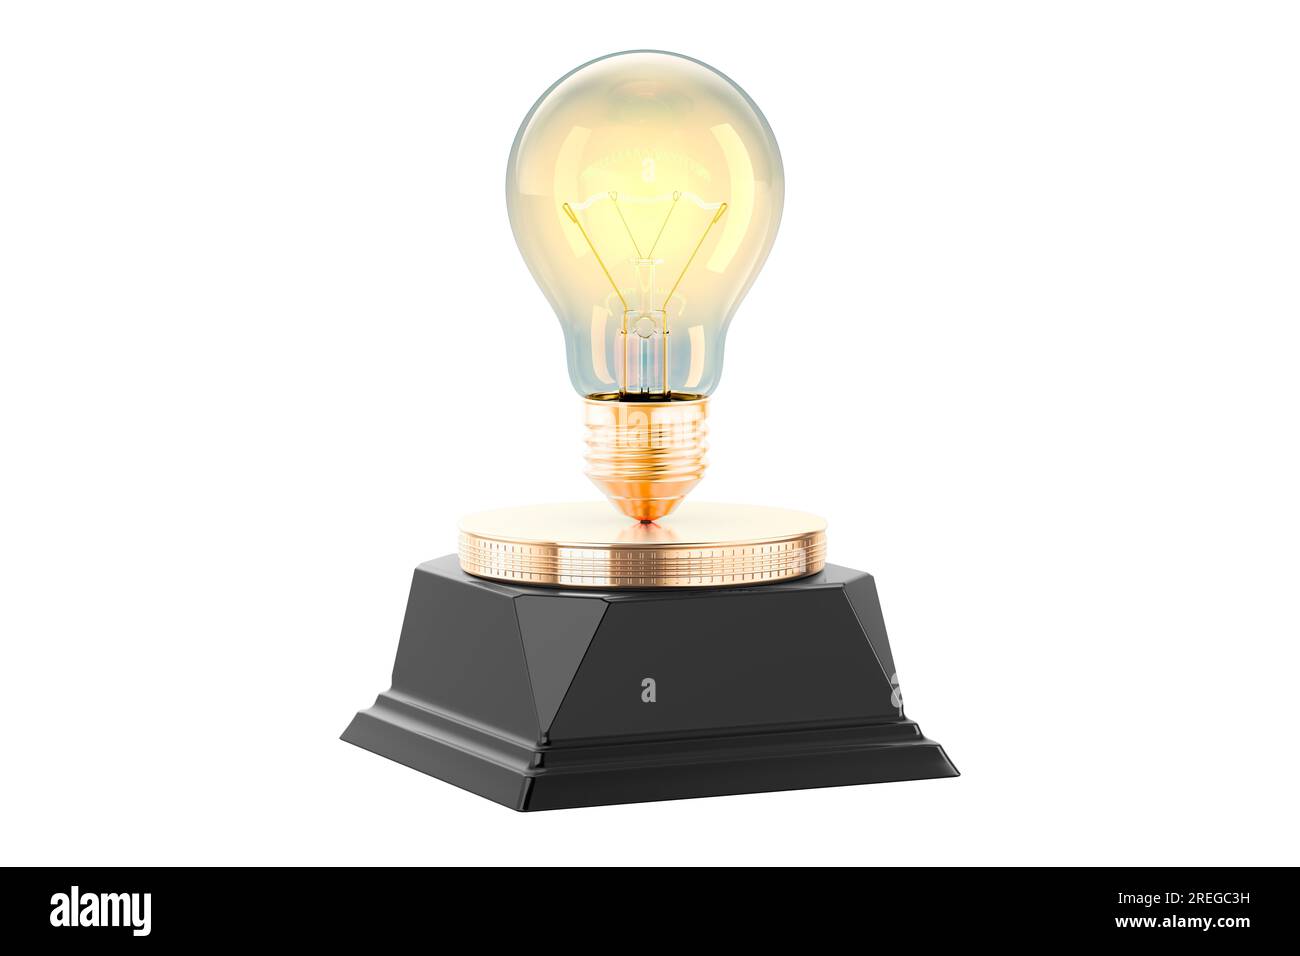 Golden light bulb, Award Trophy Pedestal. 3d Rendering isolated on white background Stock Photo